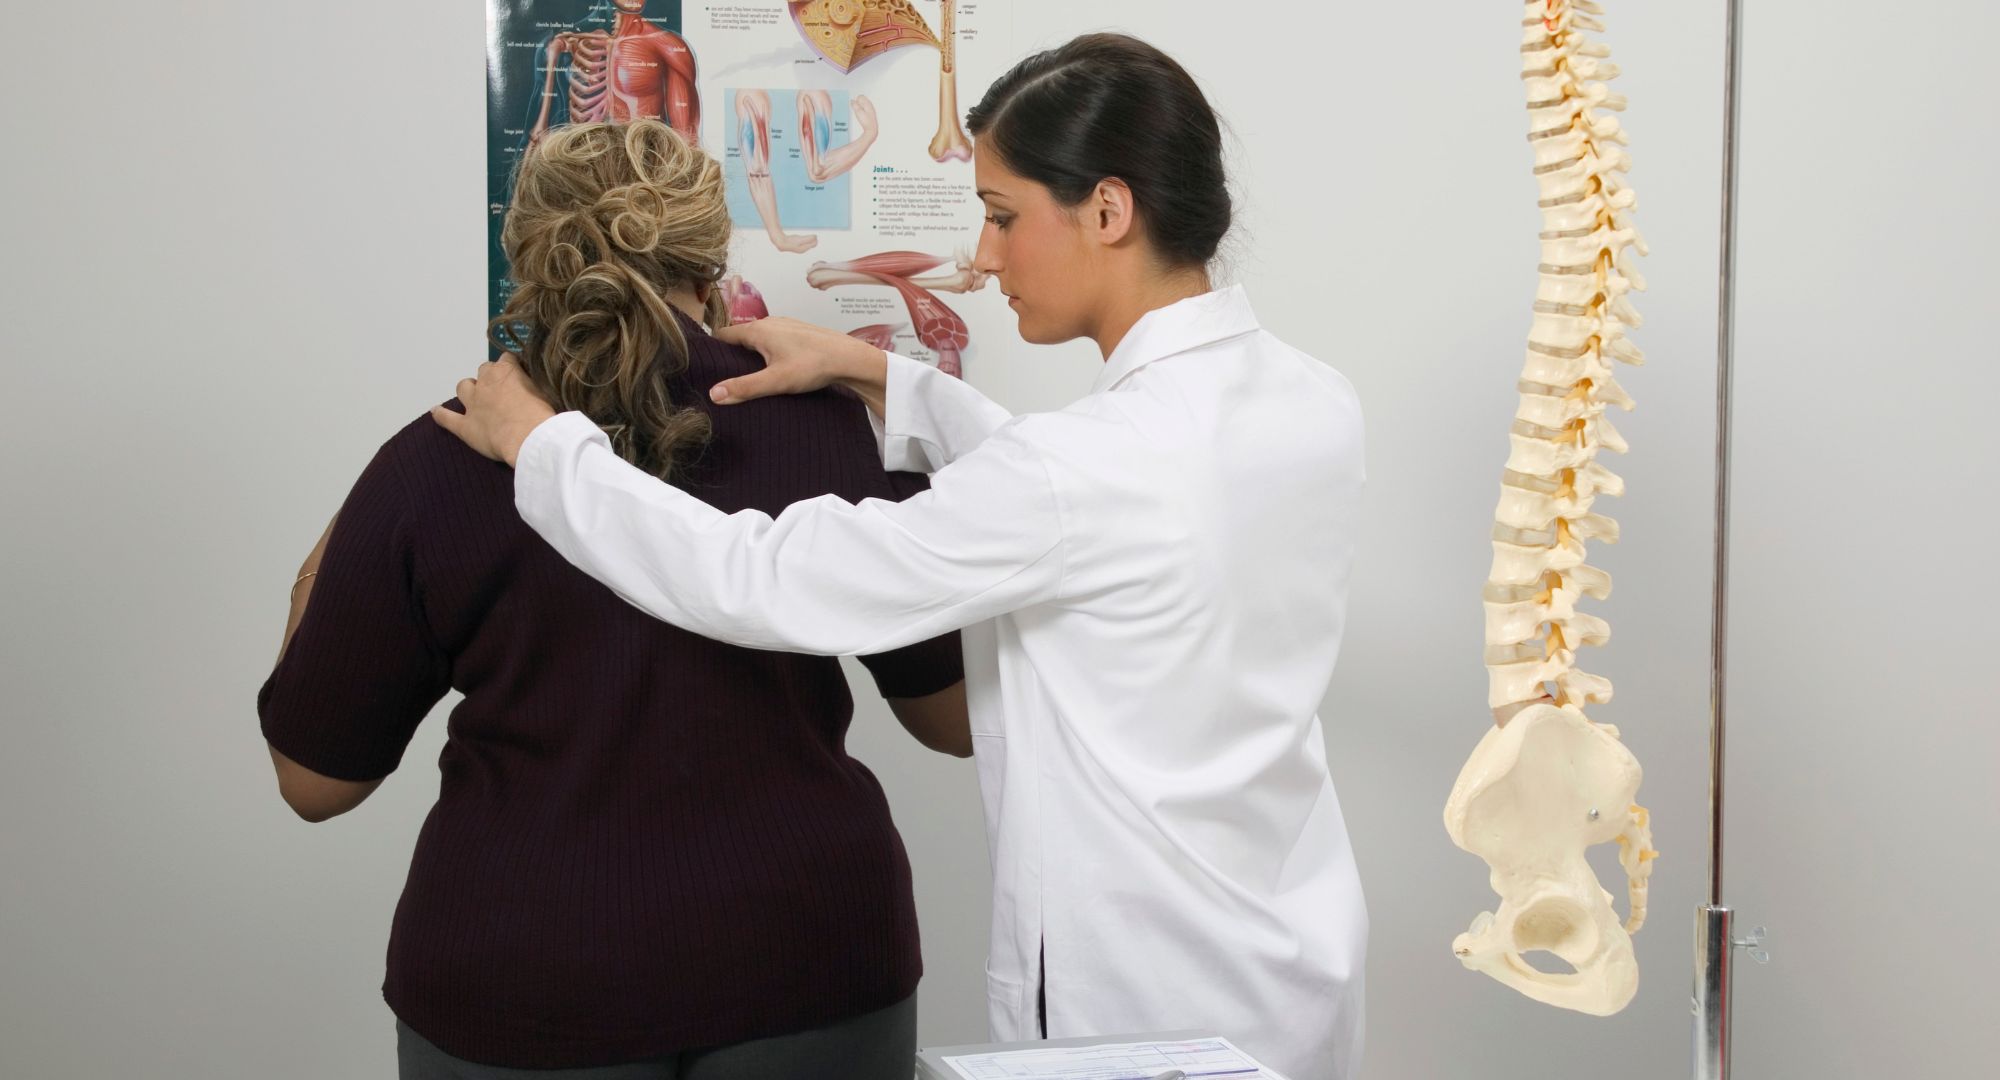 chiropractor adjust a patient's back